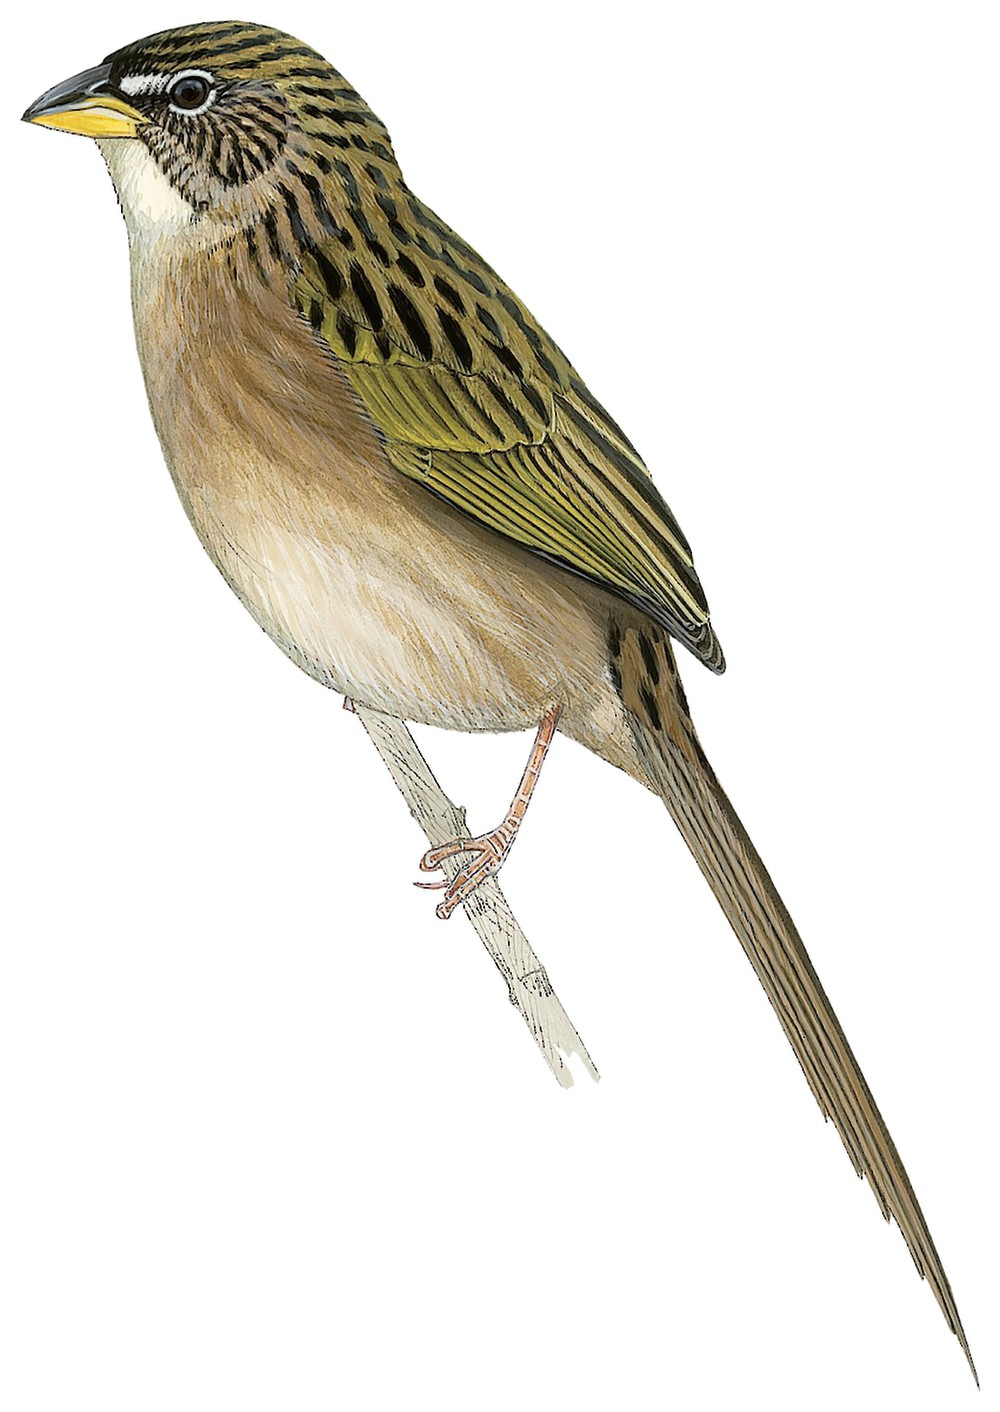 Duida Grass-Finch / Emberizoides duidae